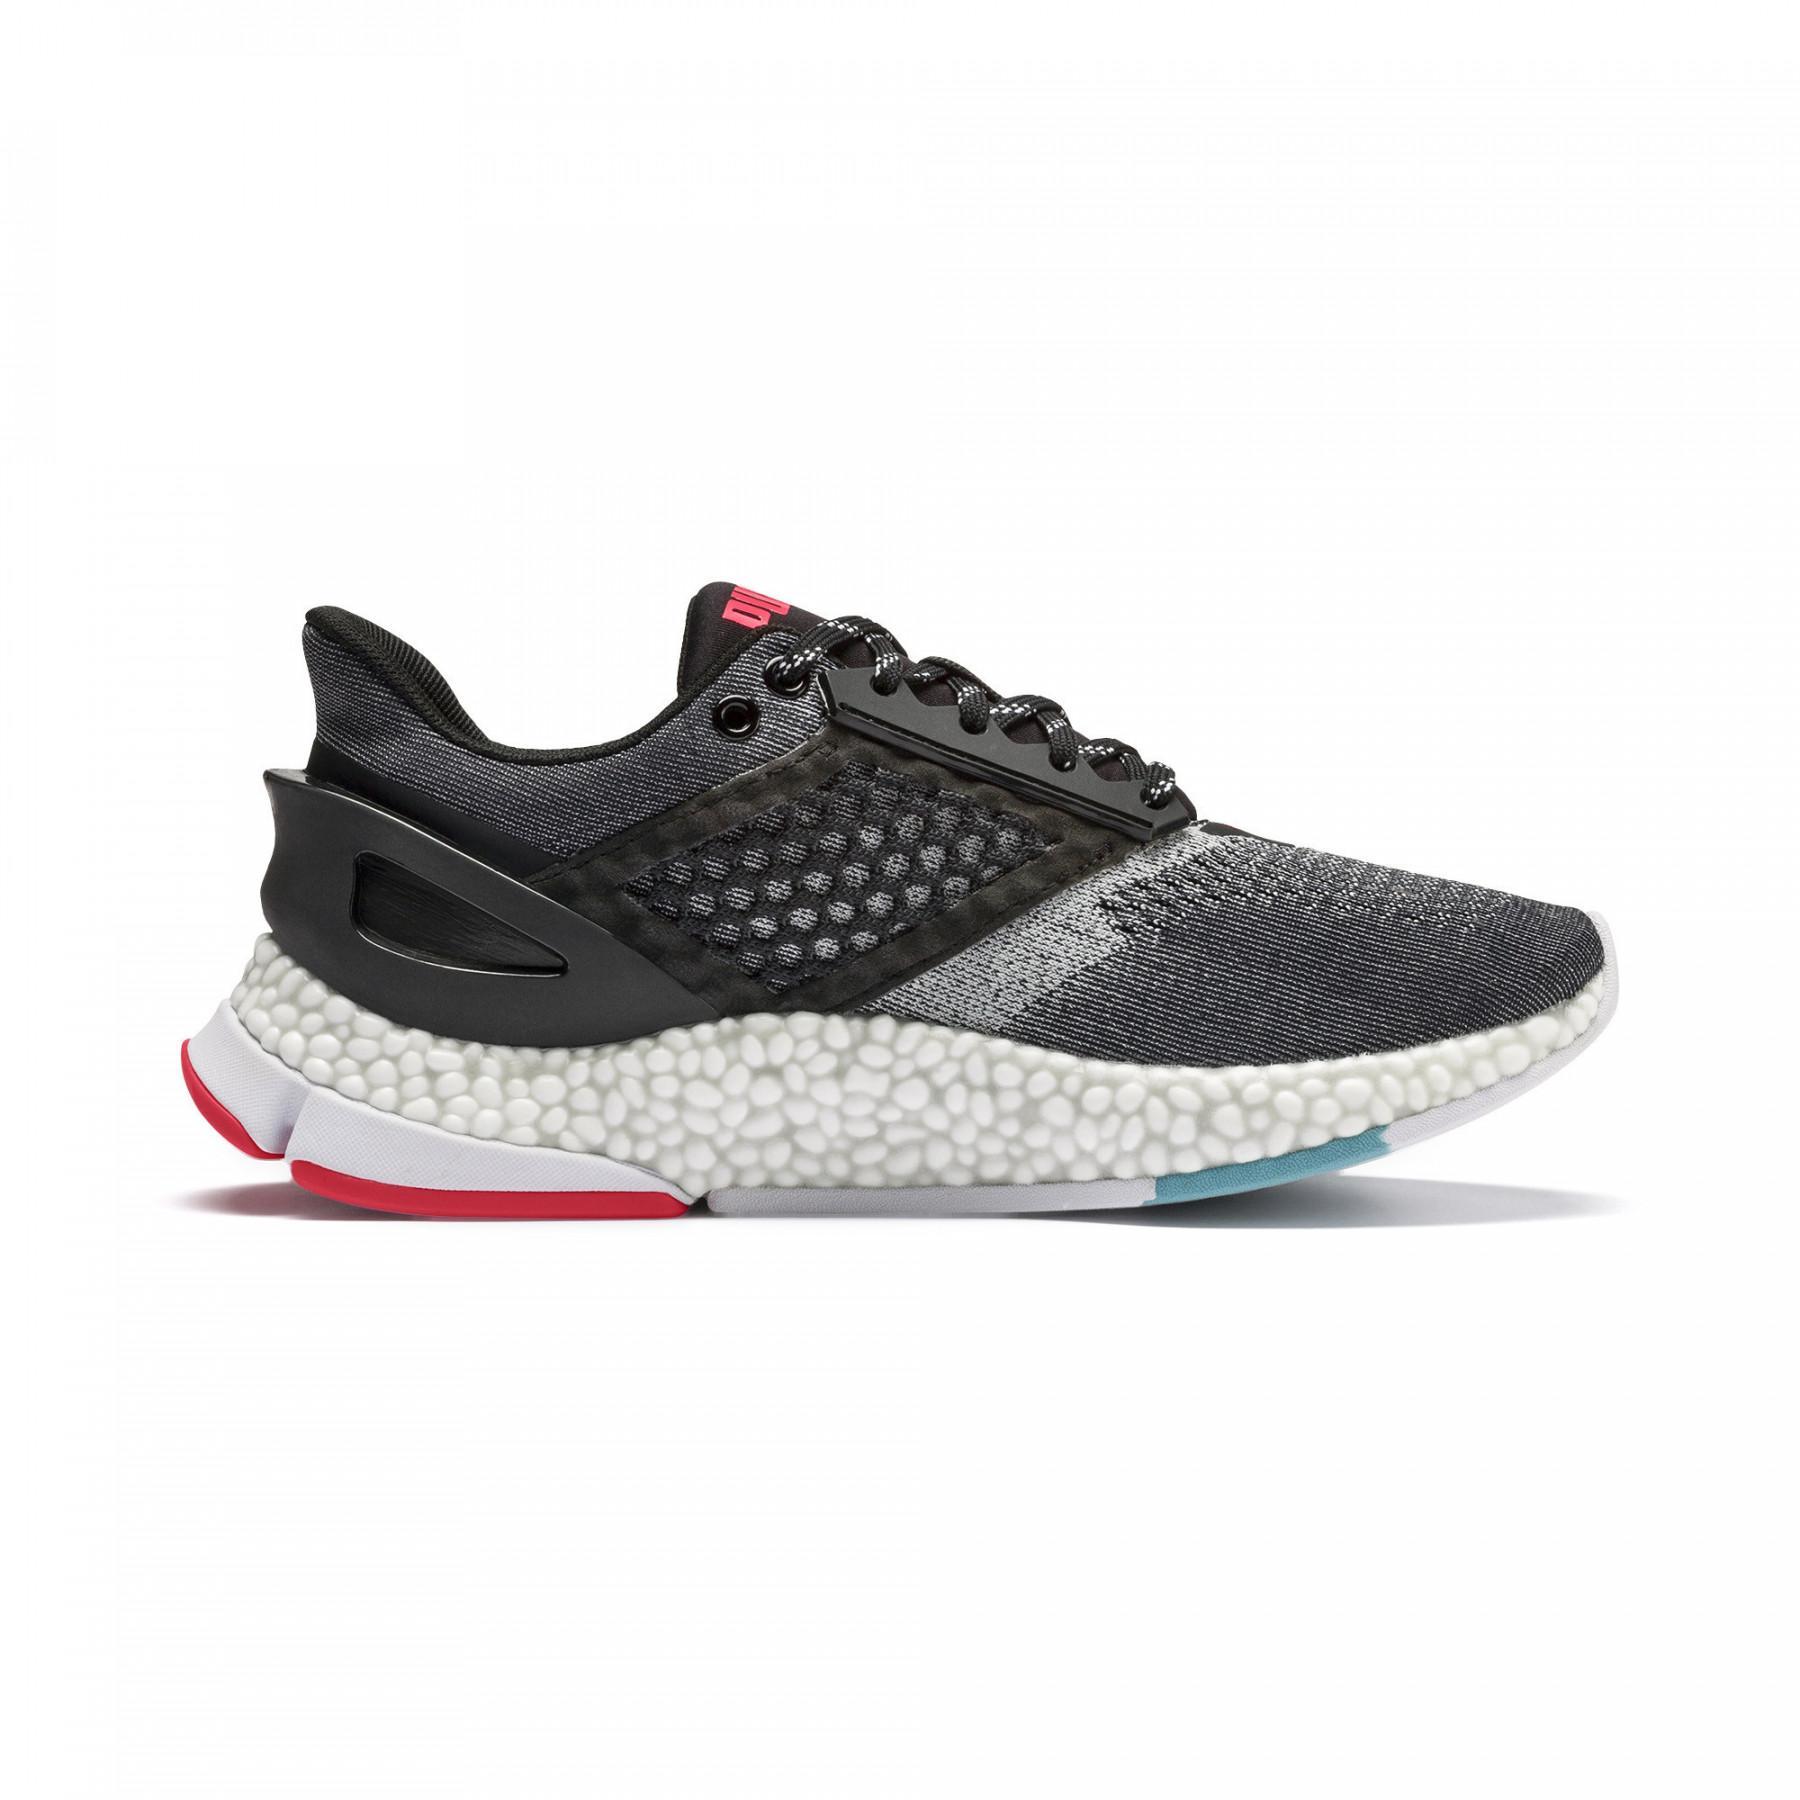 Chaussures de running femme Puma Hybrid Netfit Astro